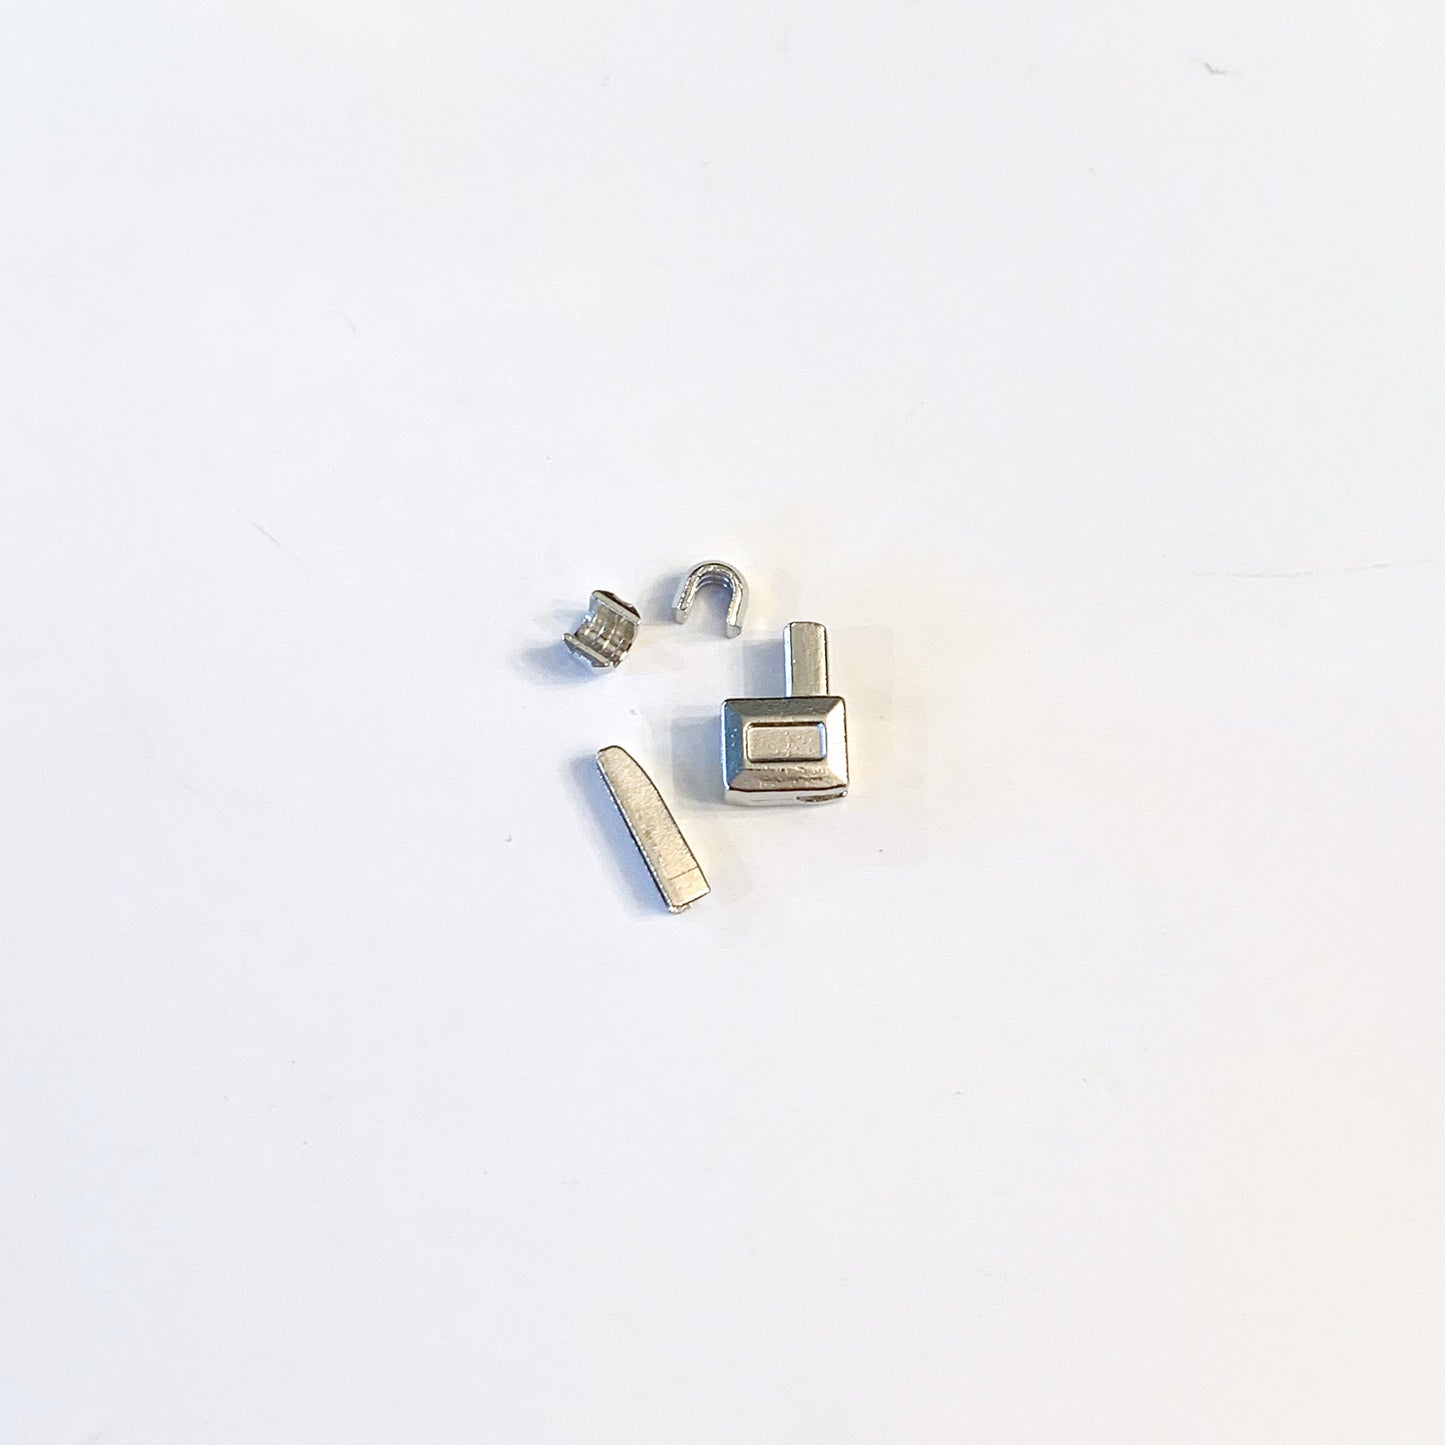 Hardware - Separating Zipper Kit Nylon #5